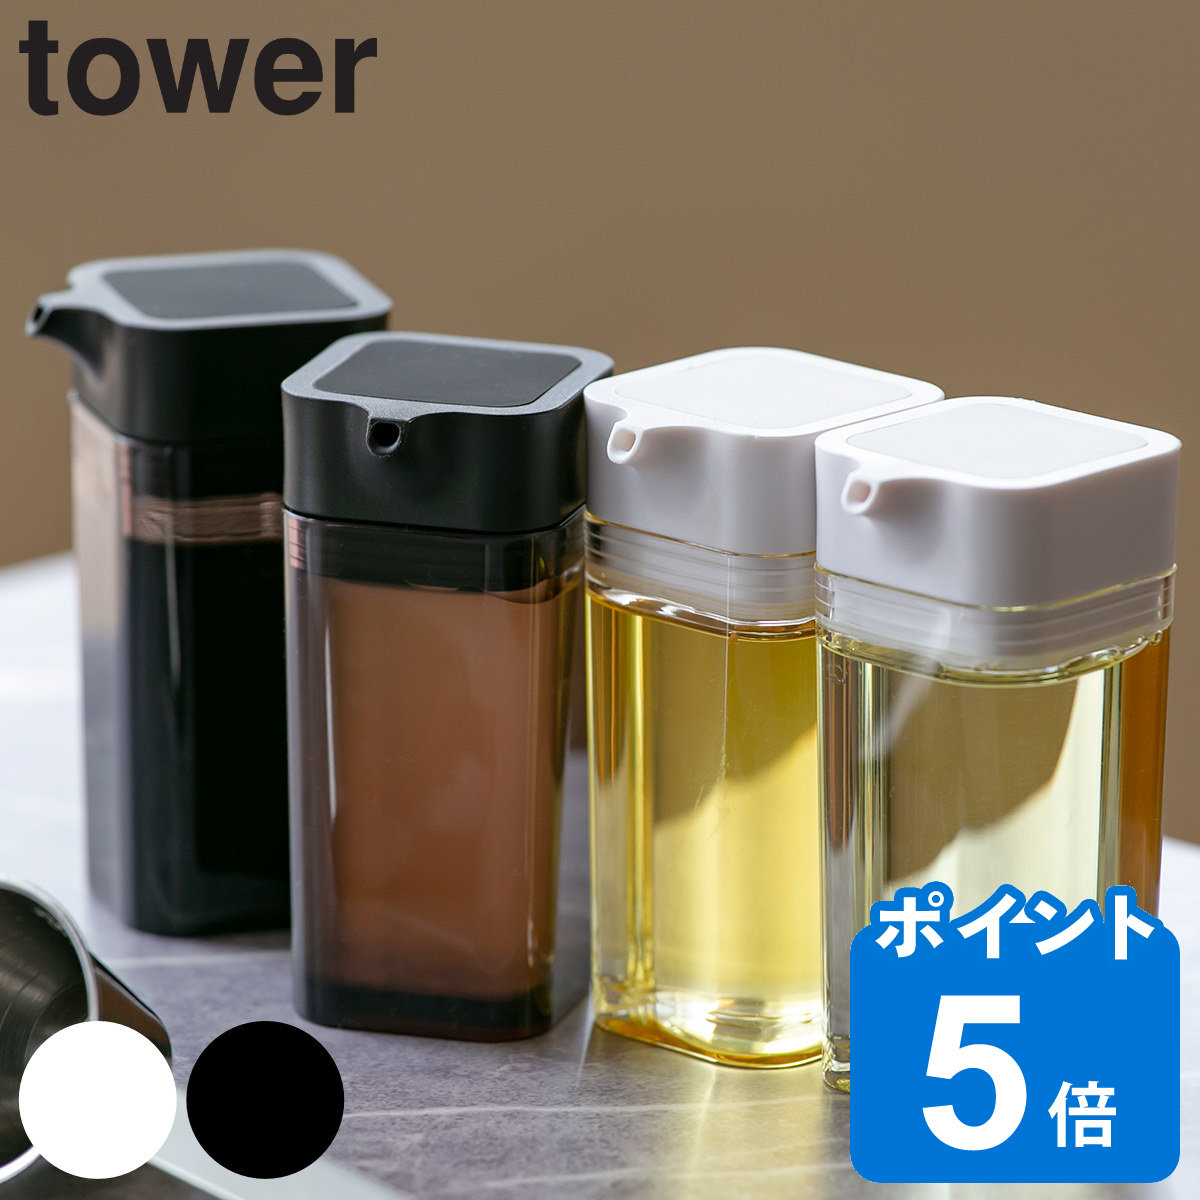 tower プッシュ式醤油差し タワー